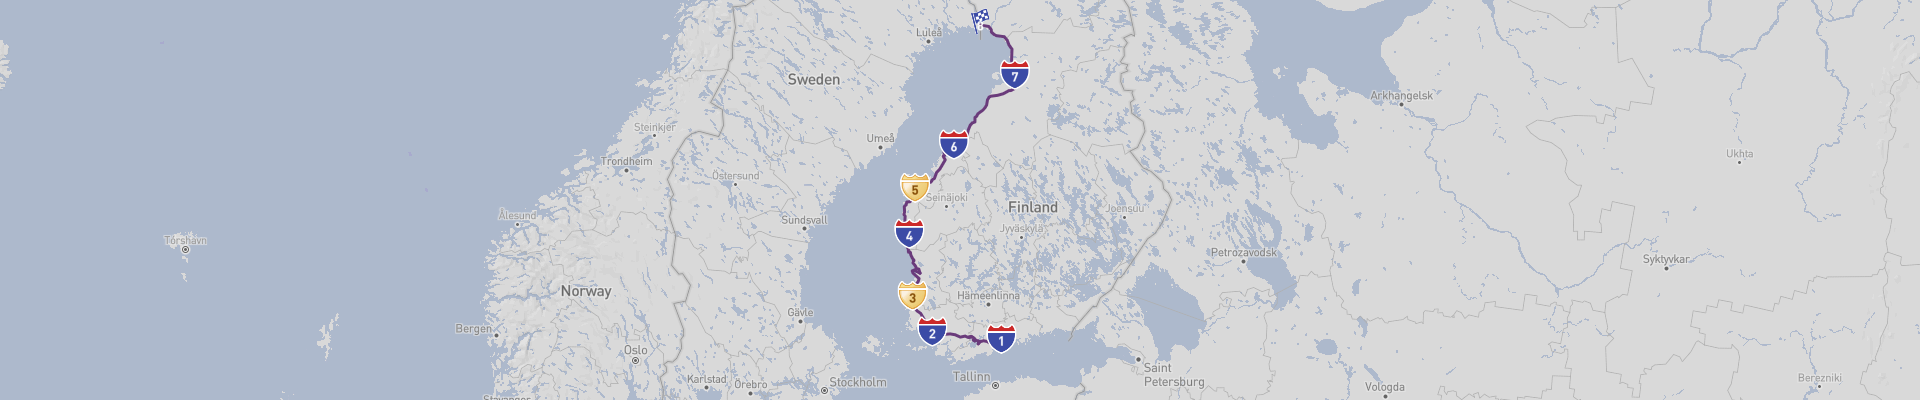 Finland's West Coast Road Trip